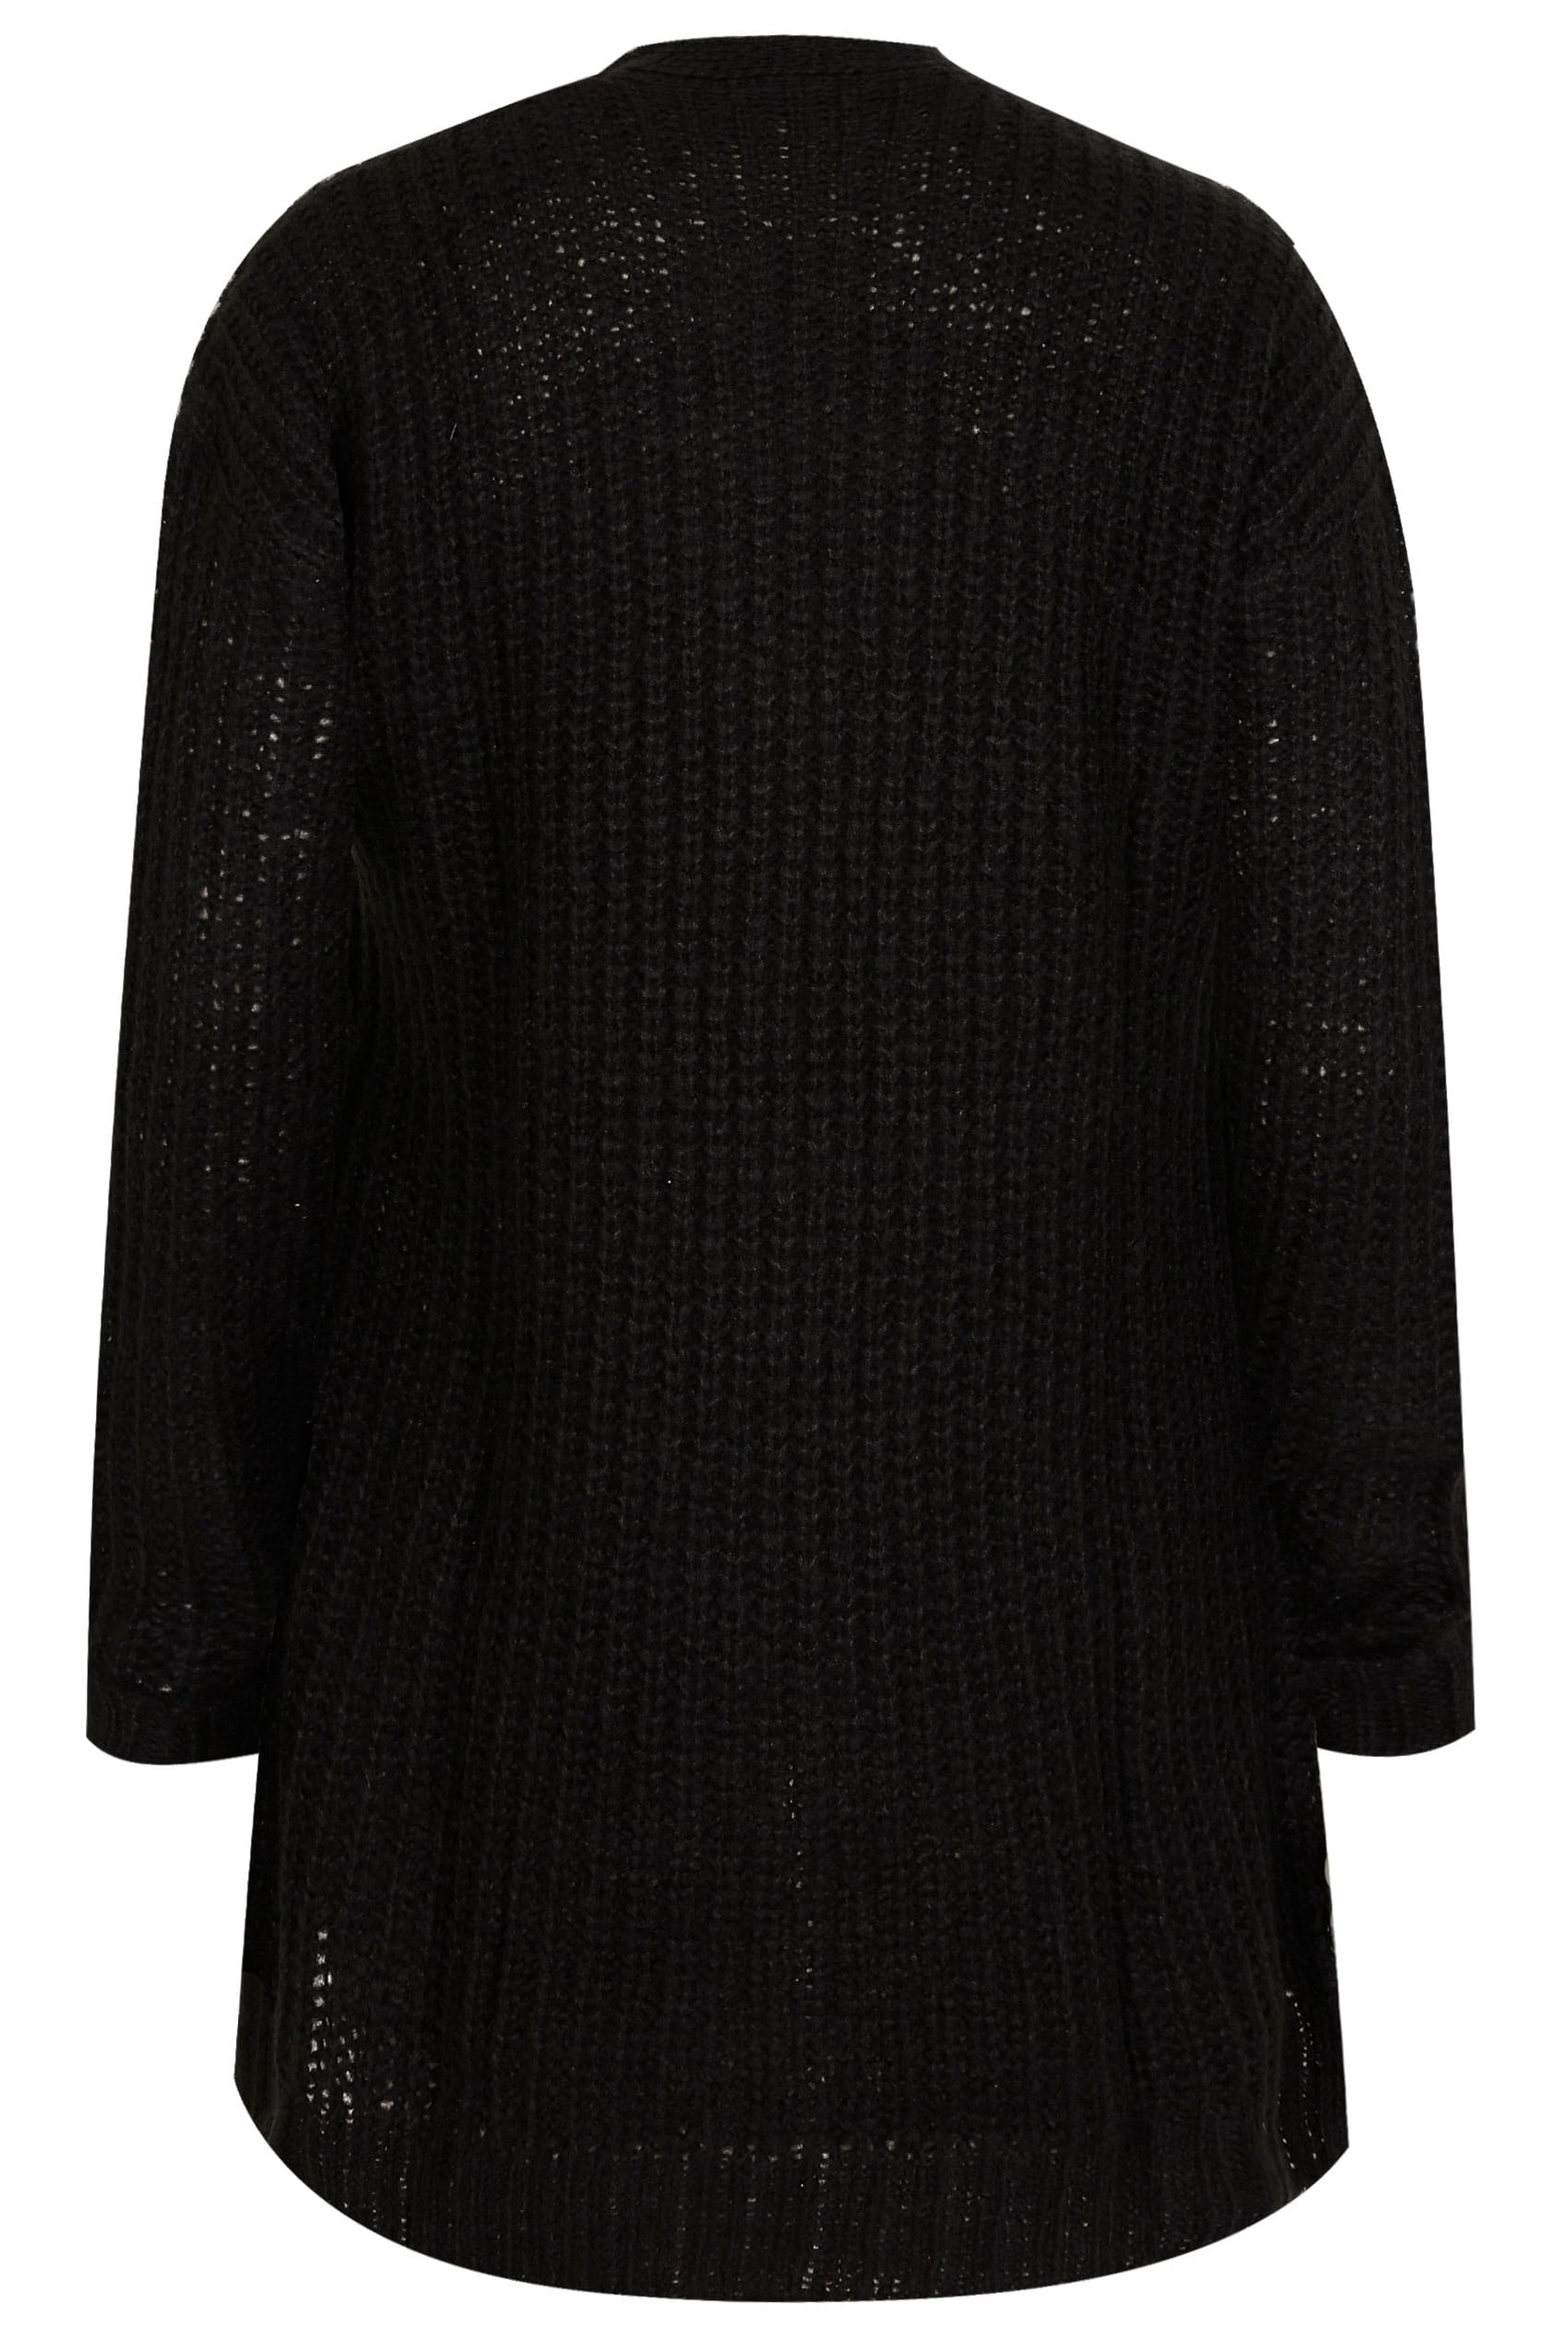 Black Chunky Knit Longline Cardigan, Plus size 16 to 36